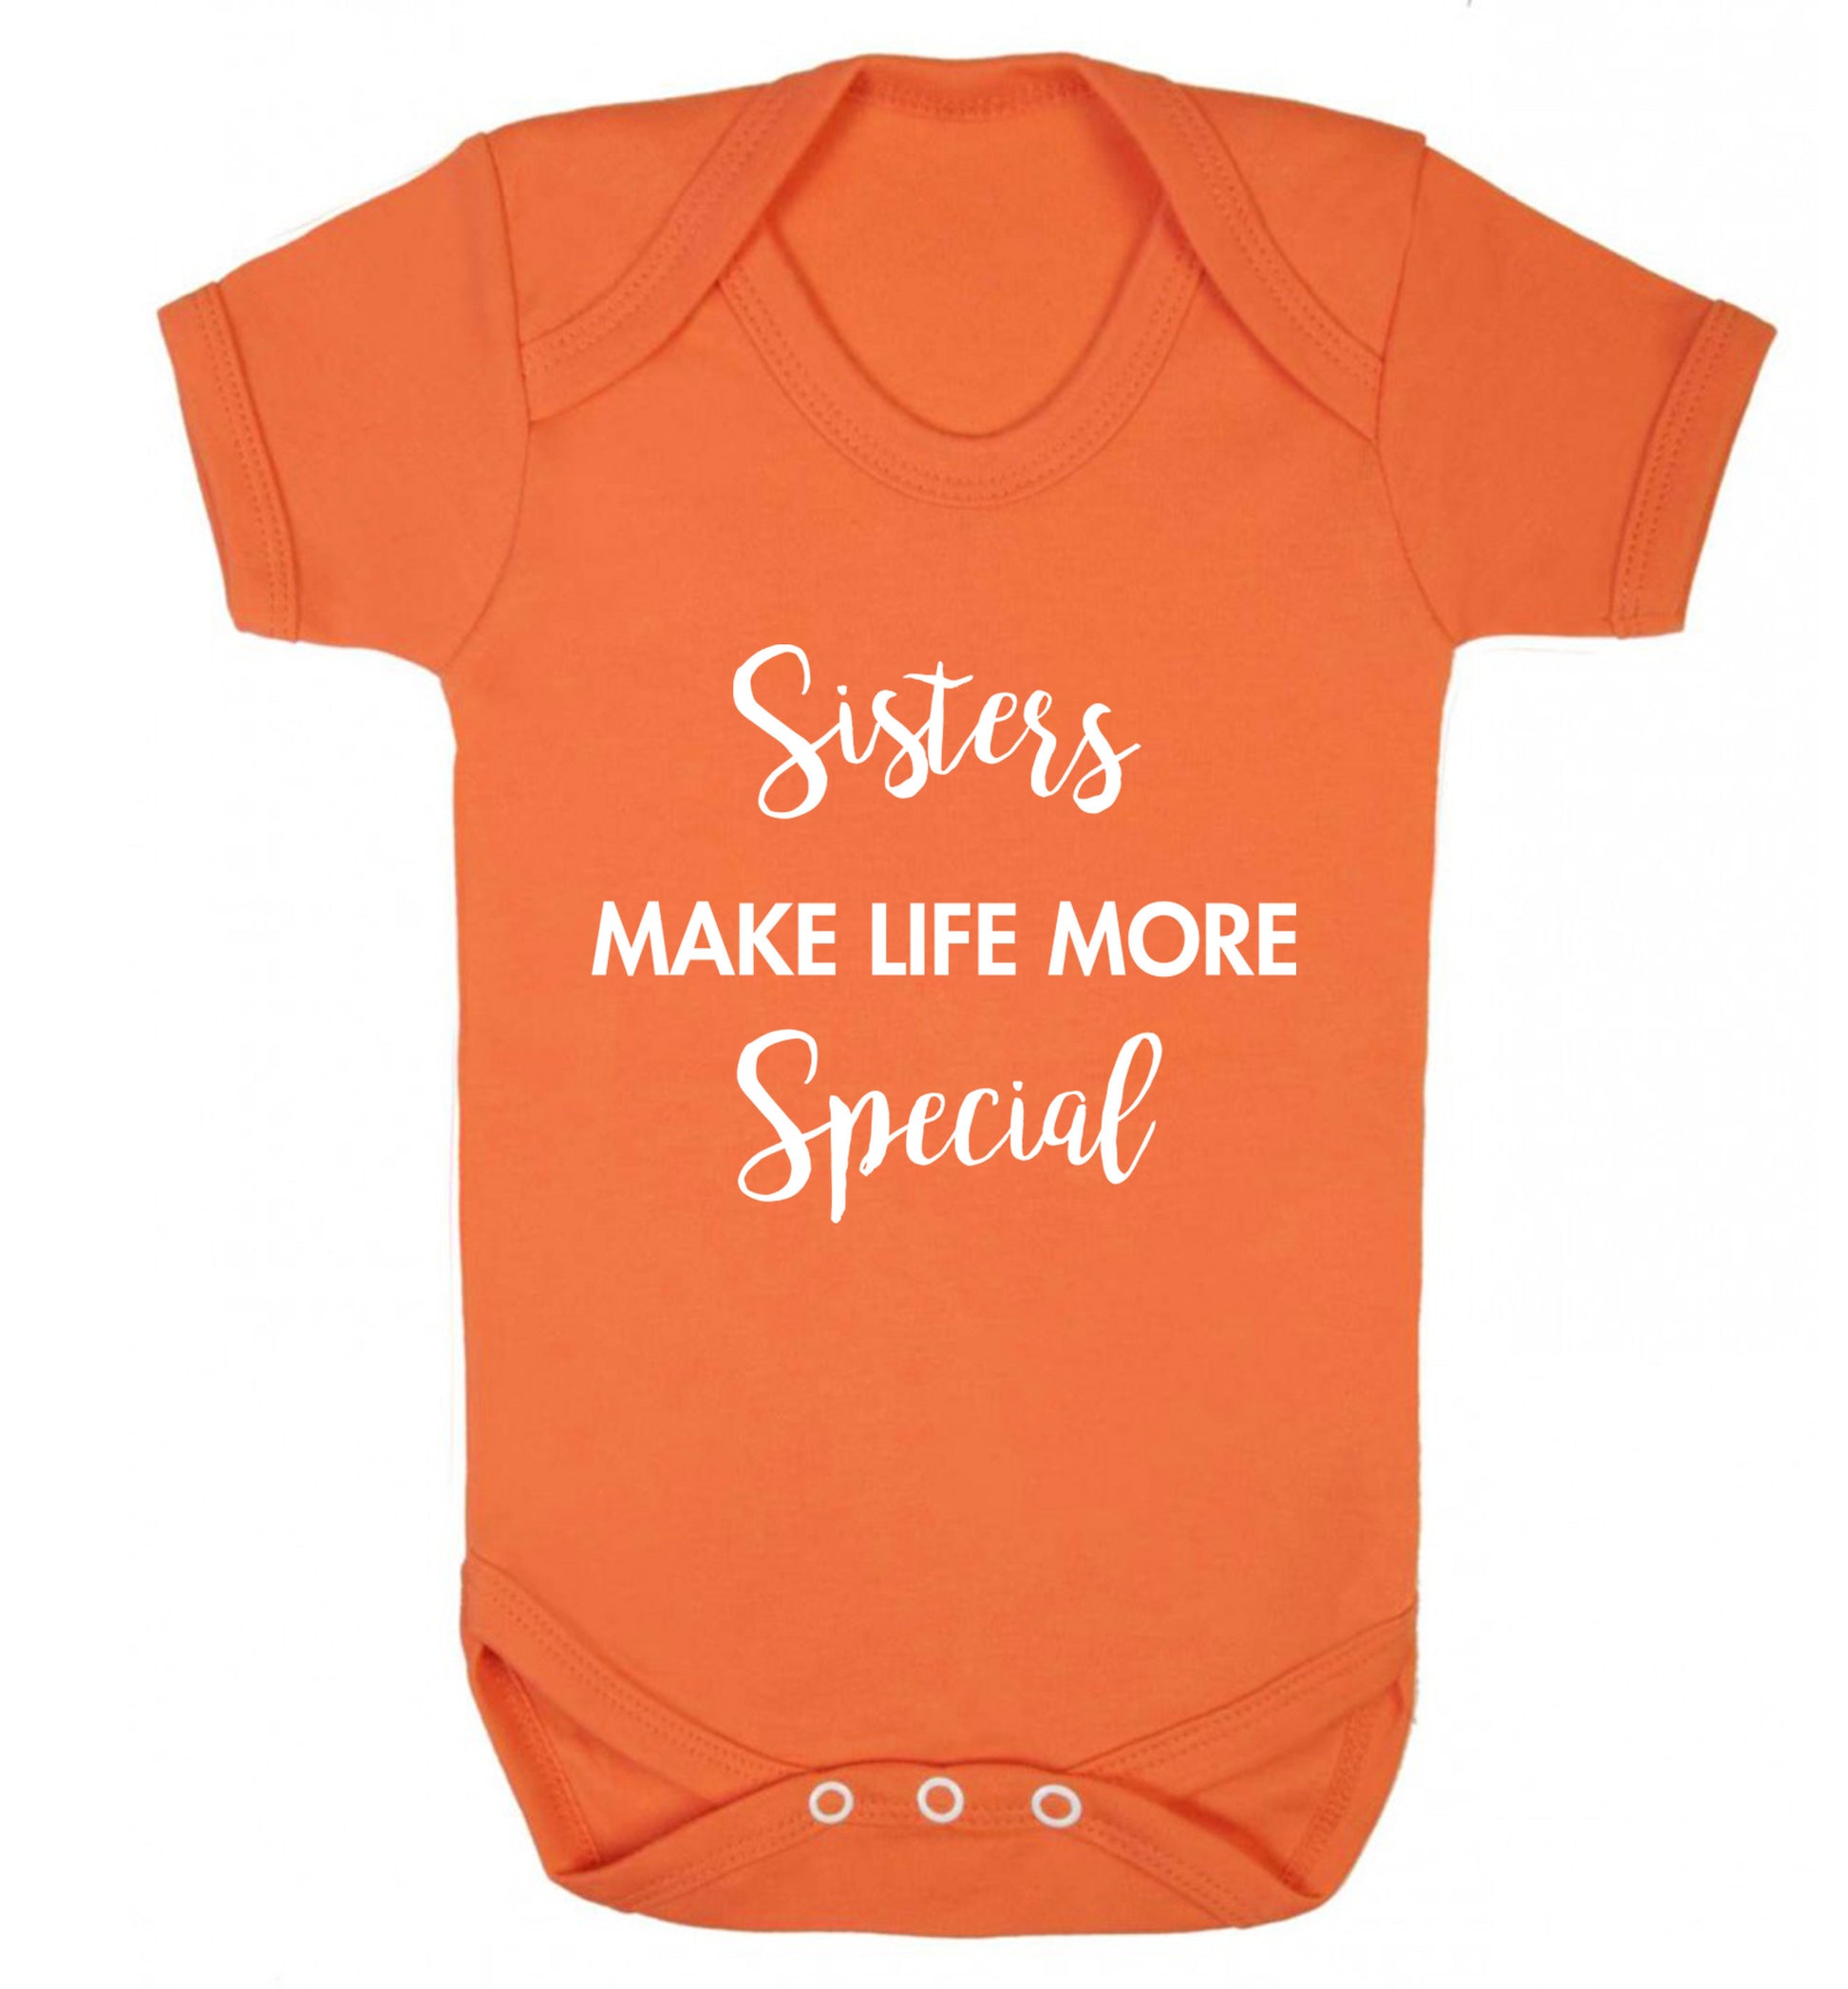 Sisters make life more special Baby Vest orange 18-24 months